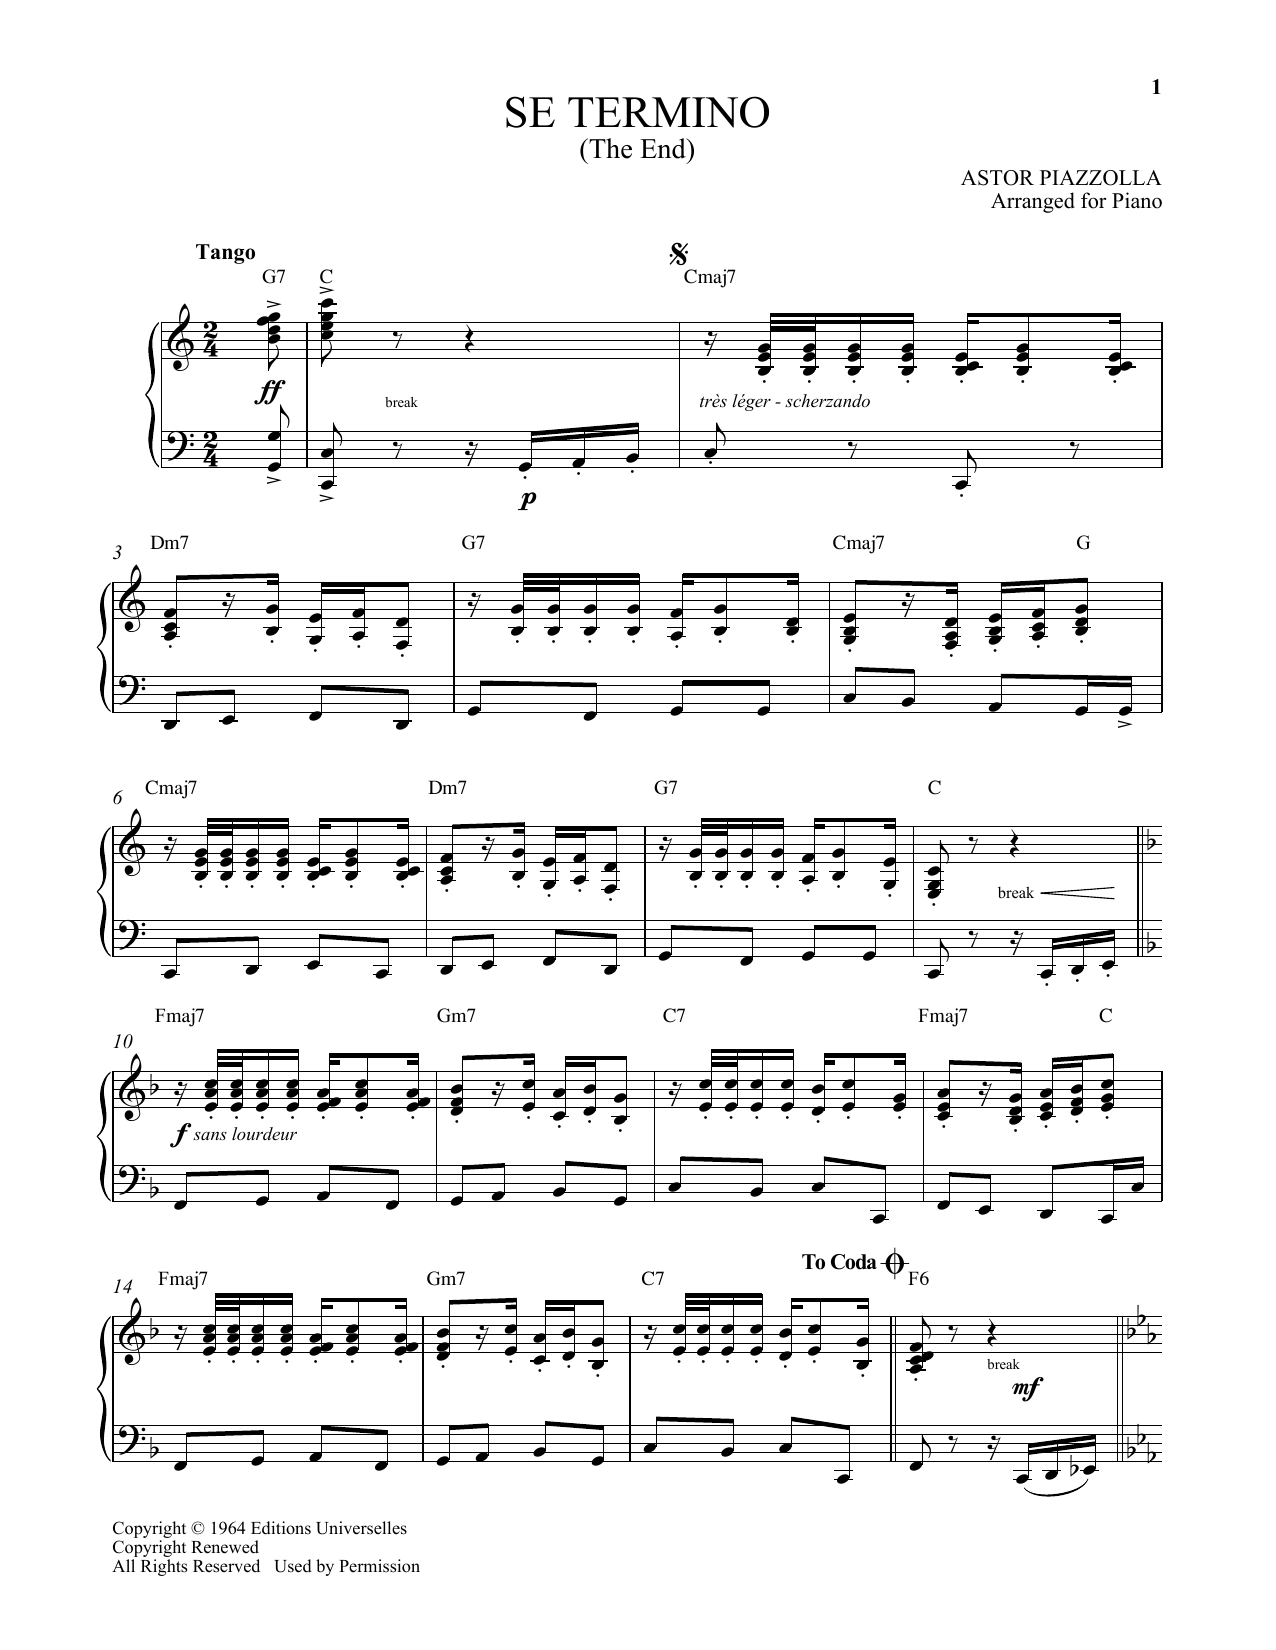 Download Astor Piazzolla Se Termino (C'est fini) Sheet Music